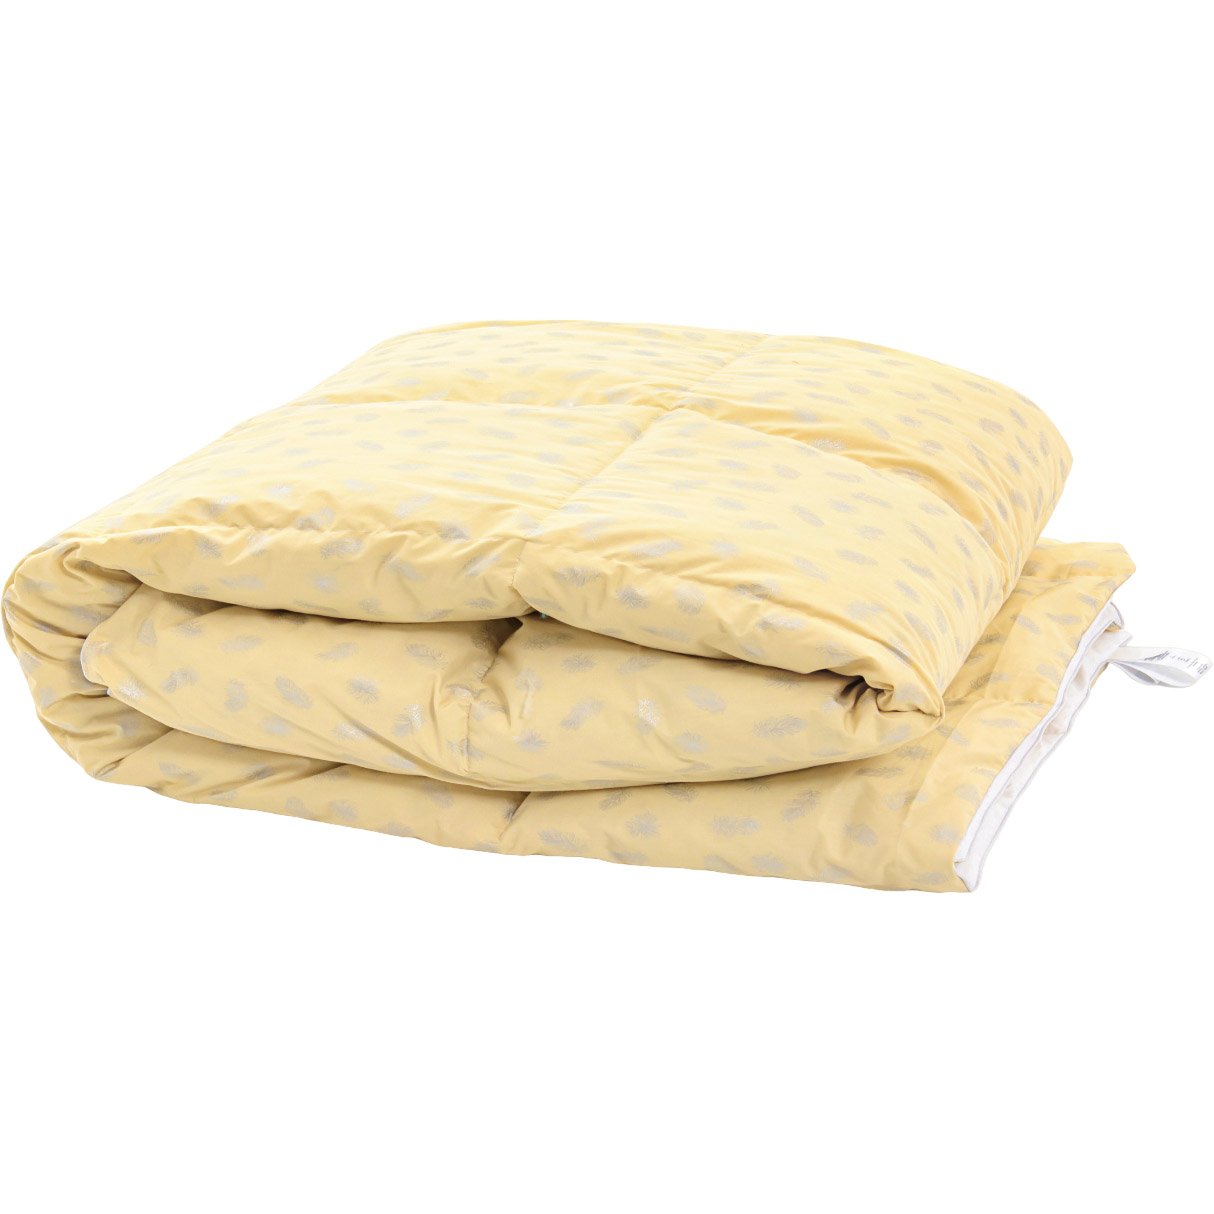 Одеяло пуховое MirSon Karmen №1851 Bio-Beige, 50% пух, king size, 240x220, бежевое (2200003014686) - фото 1